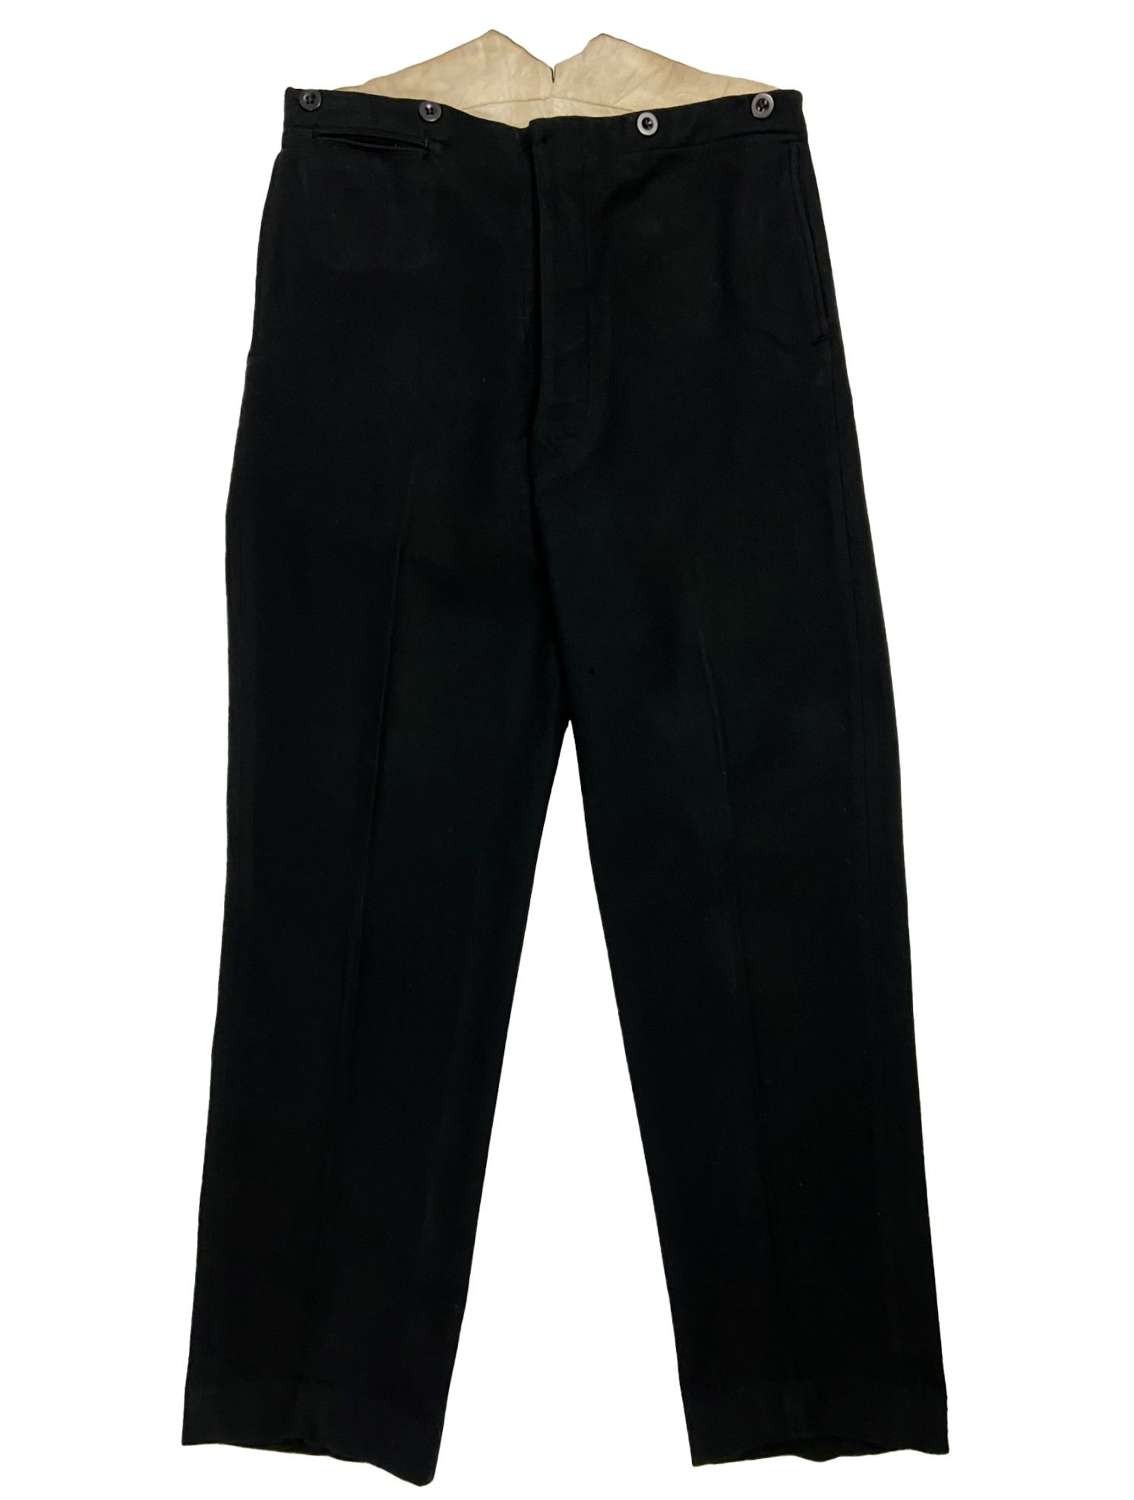 Original 1920s Black Wool Trousers